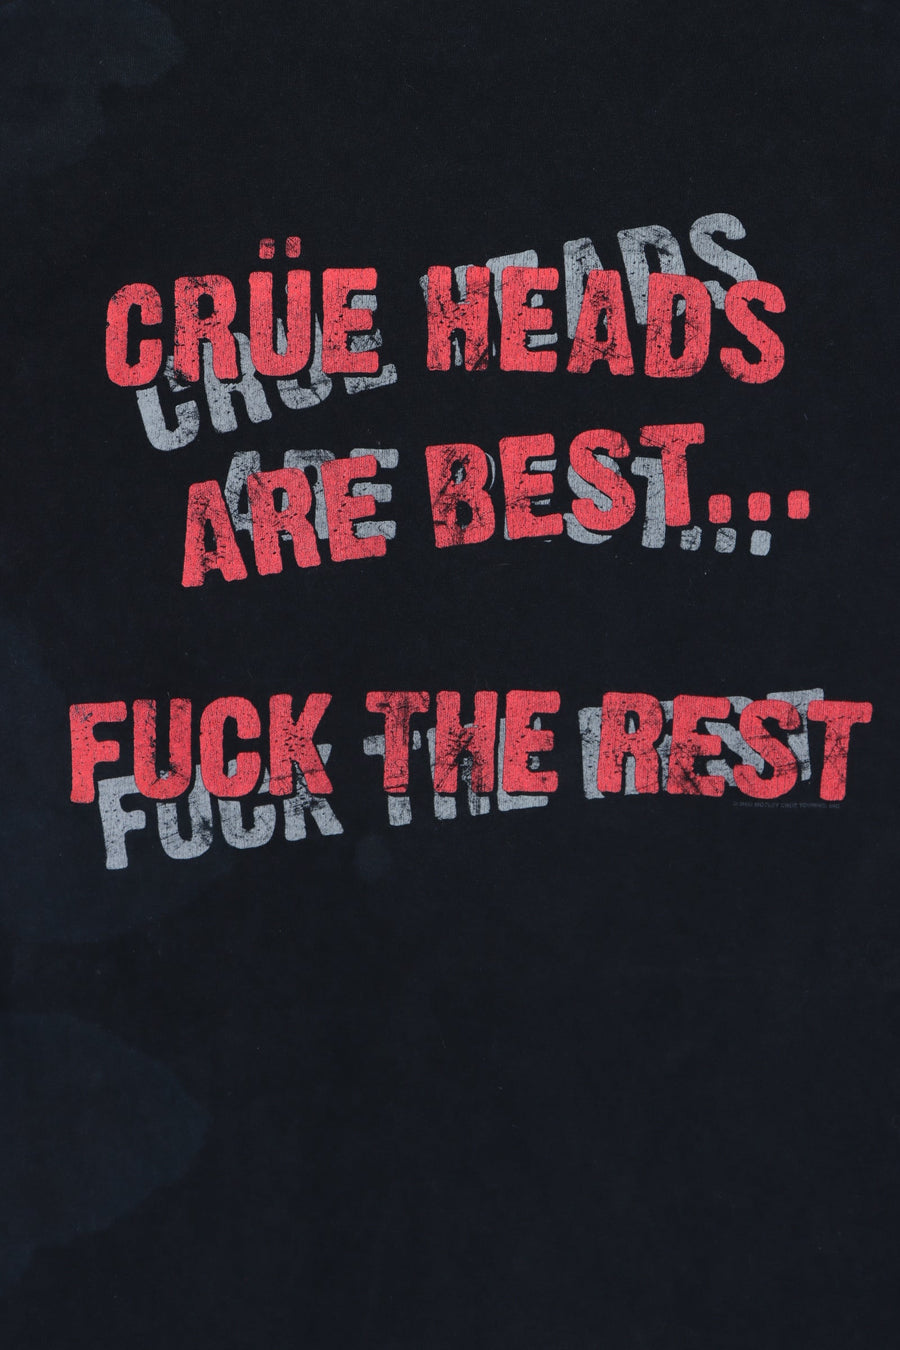 Motley Crue 'Carnival of Sins' 2005 Tour Front Back T-Shirt (L)